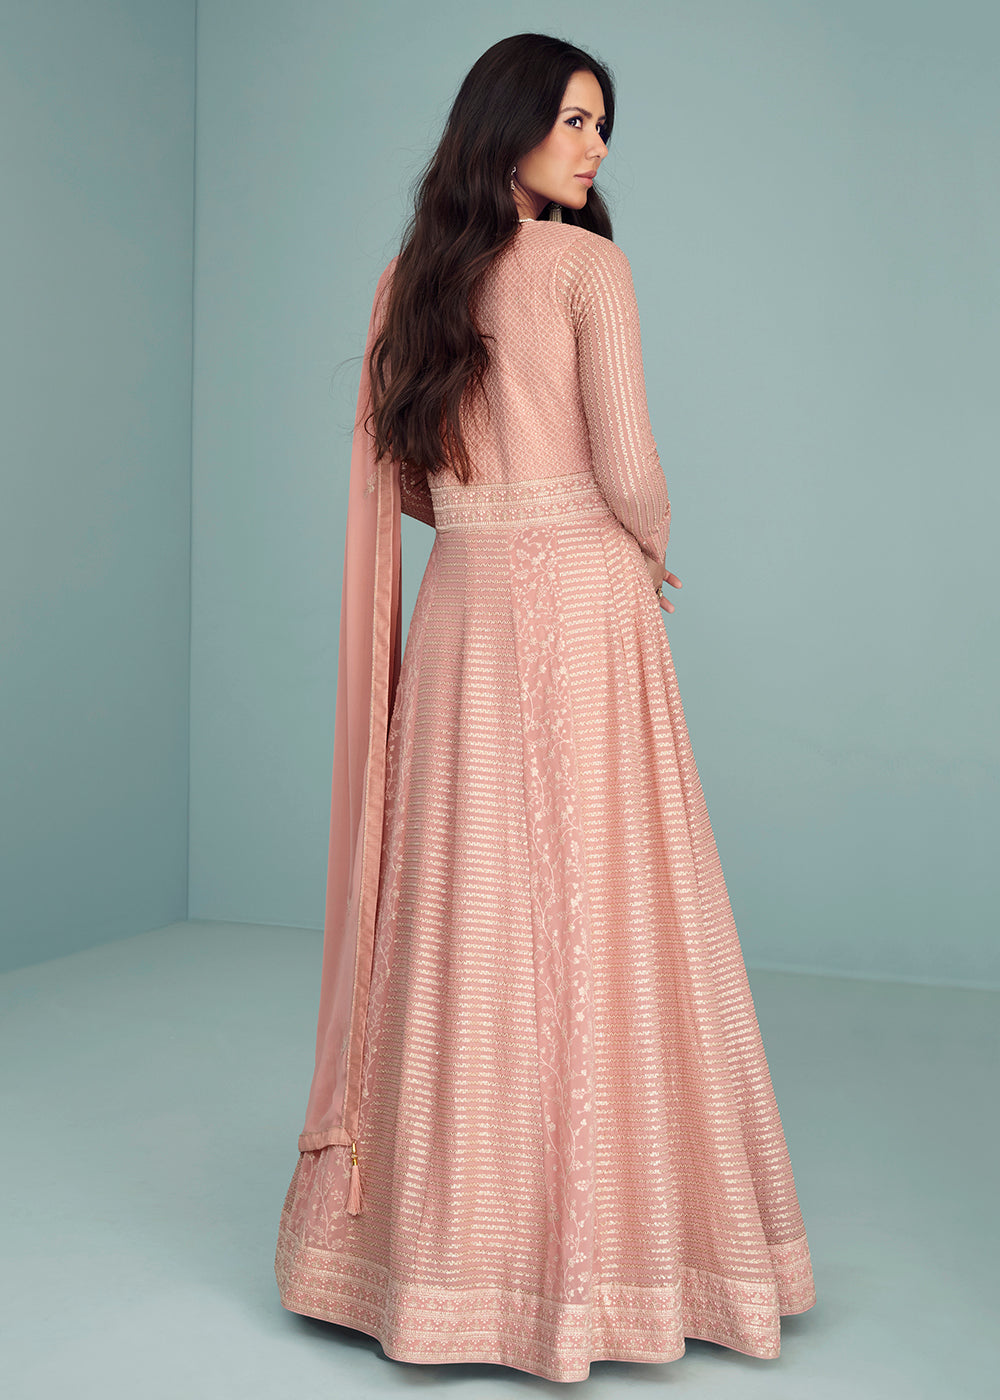 Shop Now Pleasing Peach Georgette Embellished Wedding Anarkali Suit Online featuring Sonam Bajwa at Empress Clothing in UK.